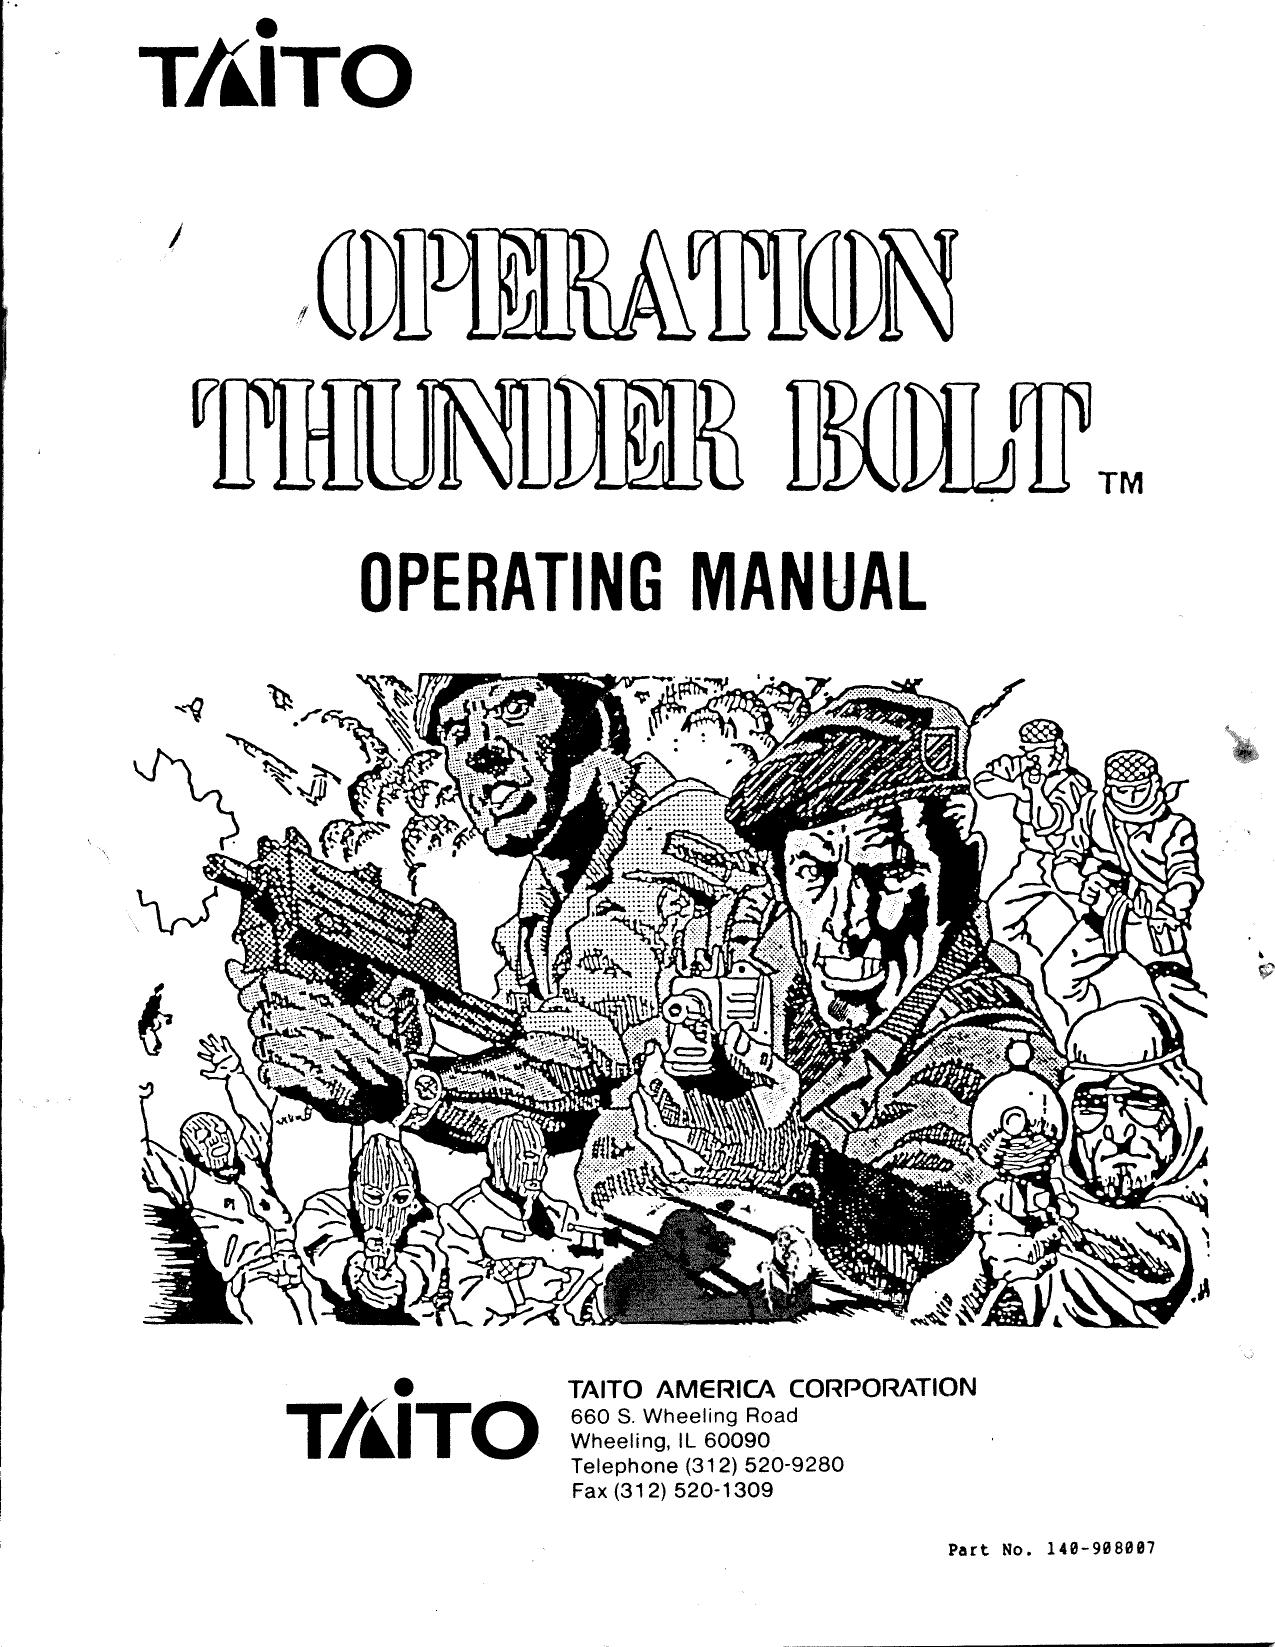 OpThunderbolt Manual